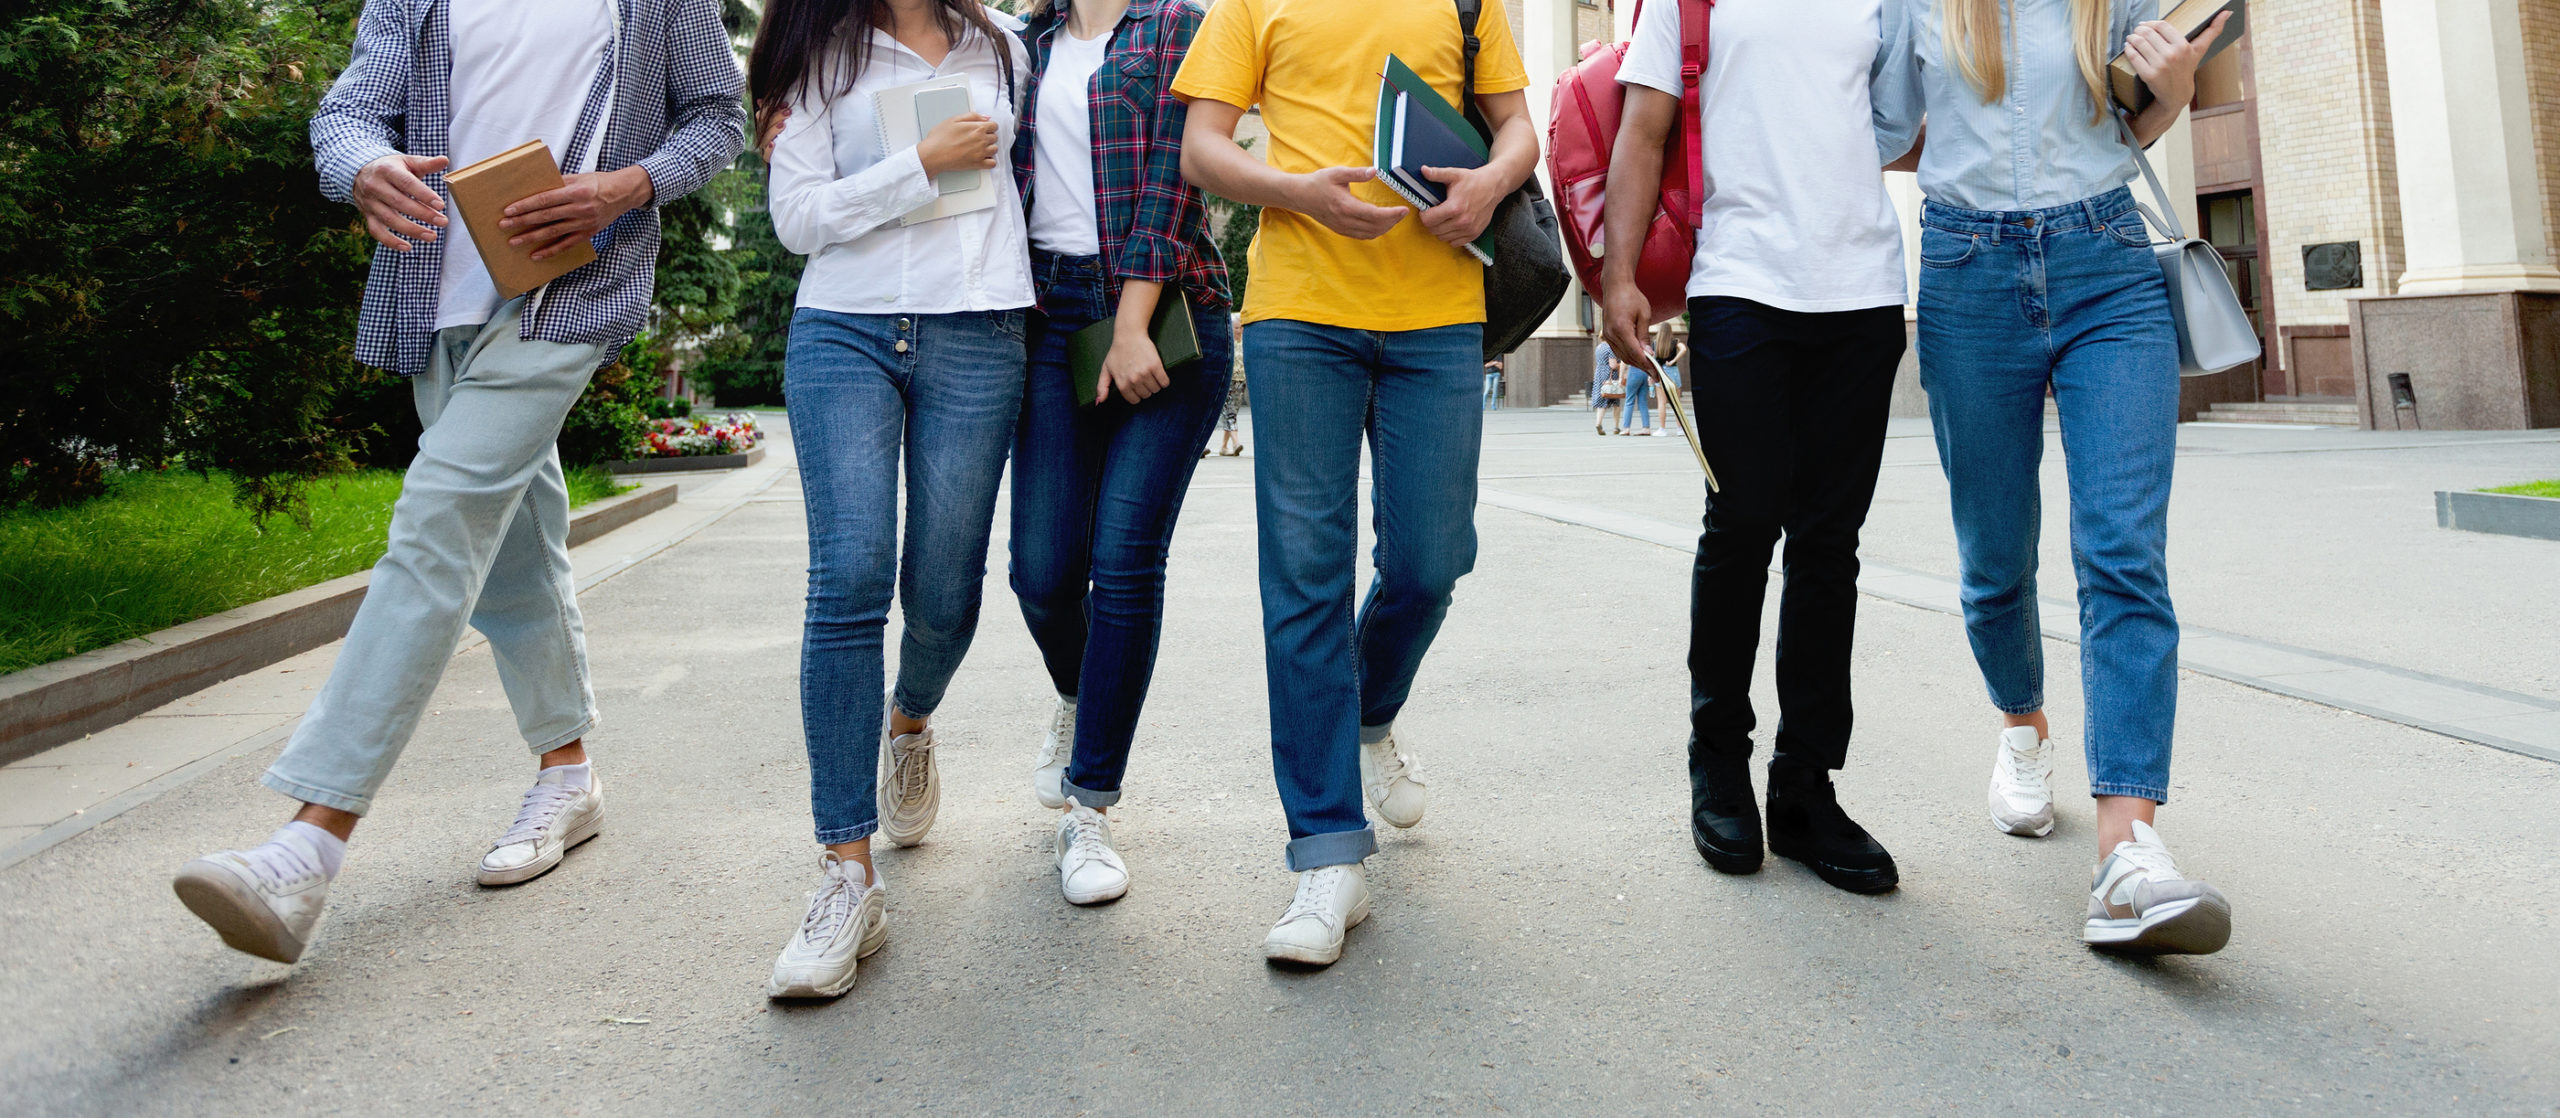 College students in high school campus walking during break, focus on legs, crop